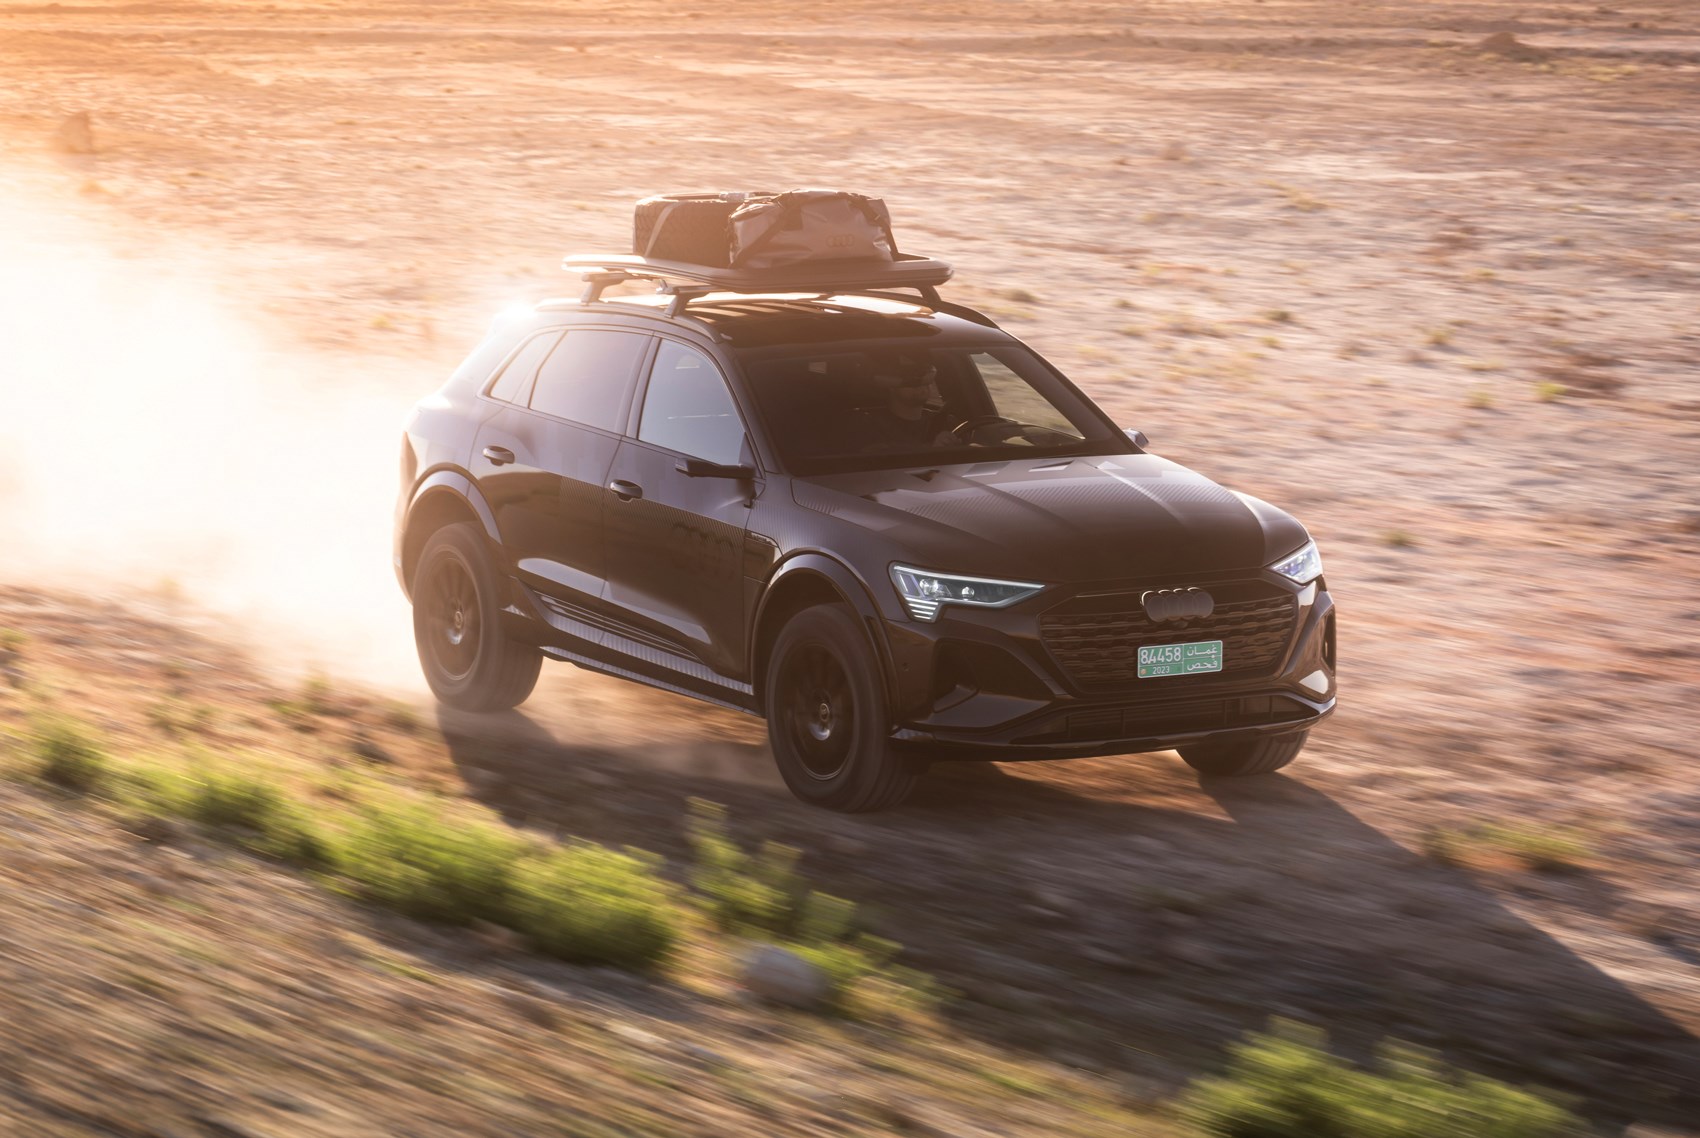 Audi Q8 Review (2024)